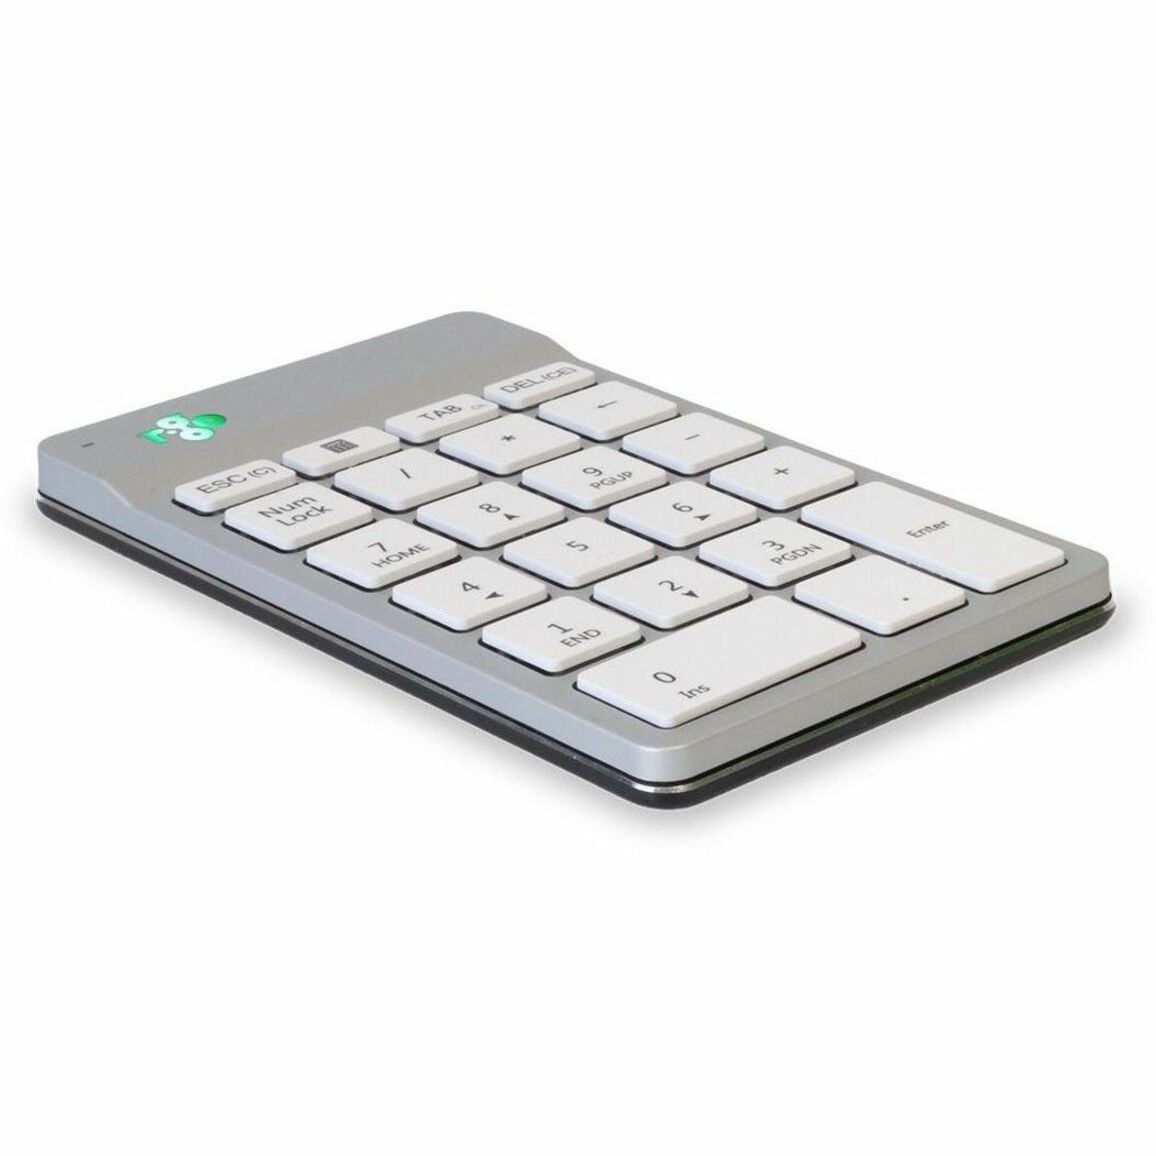 R-Go (RGOCONMWLWH) Keyboards & Keypads